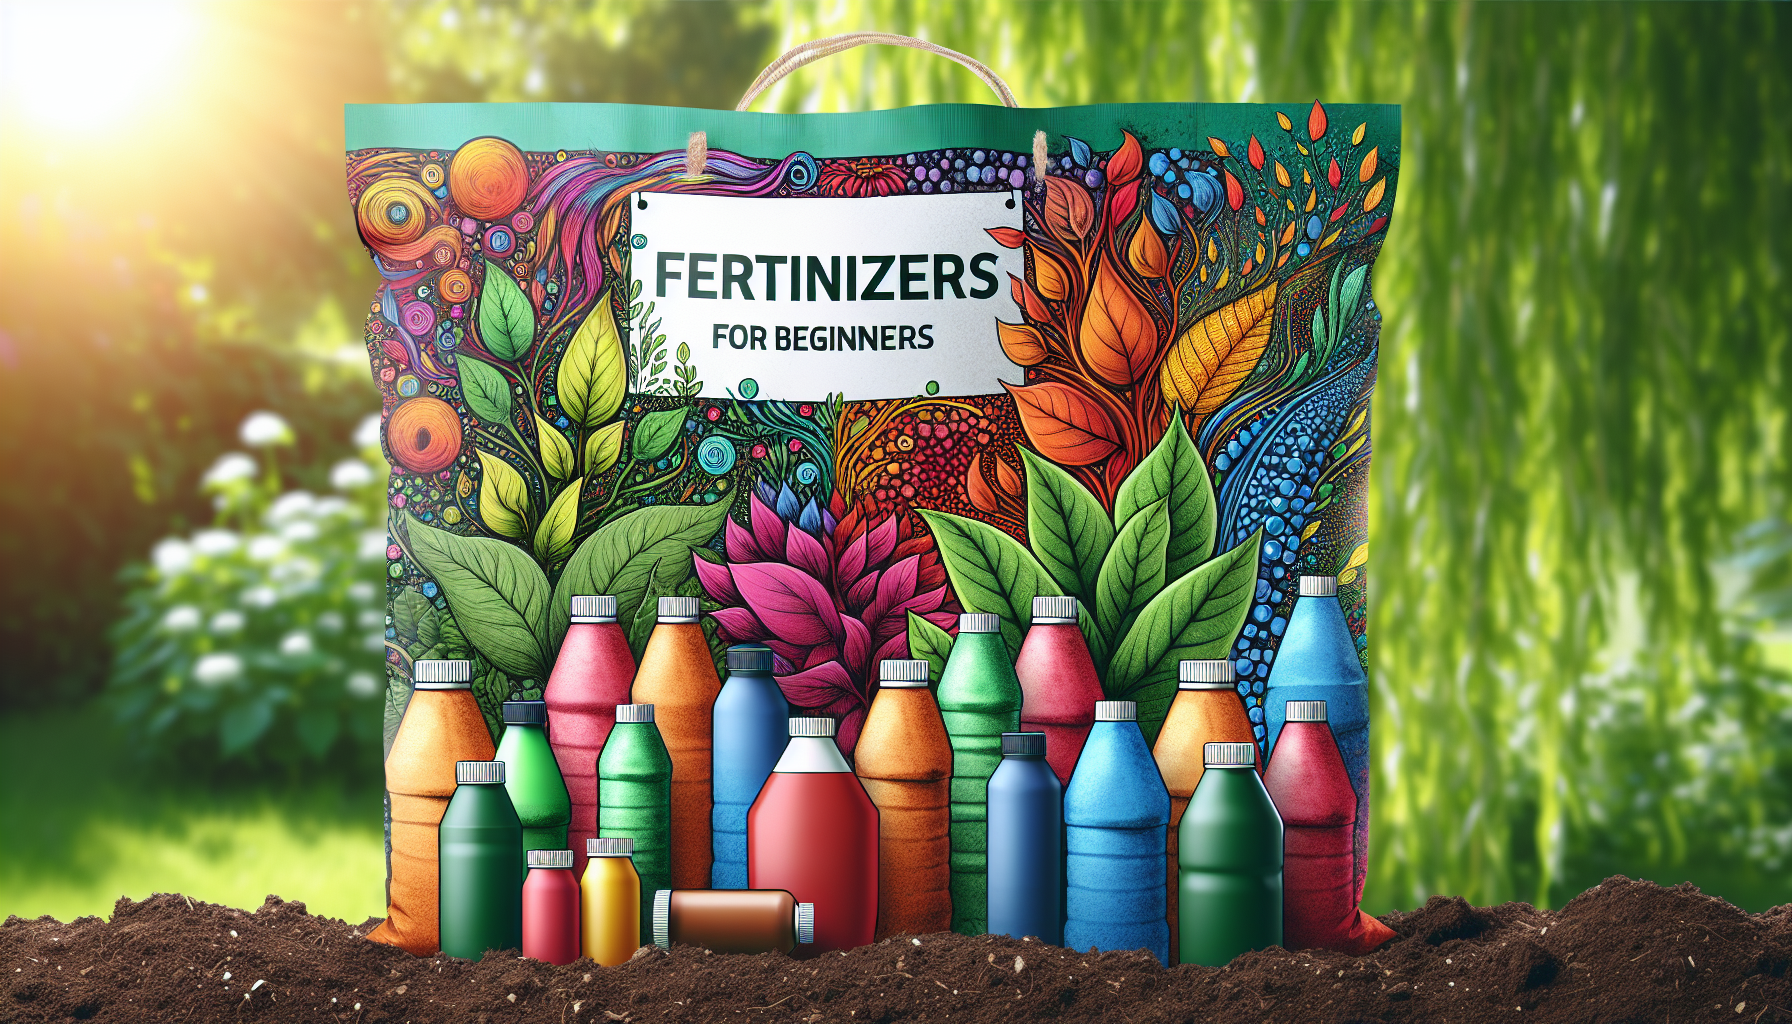 Top 5 Fertilizers For Beginners